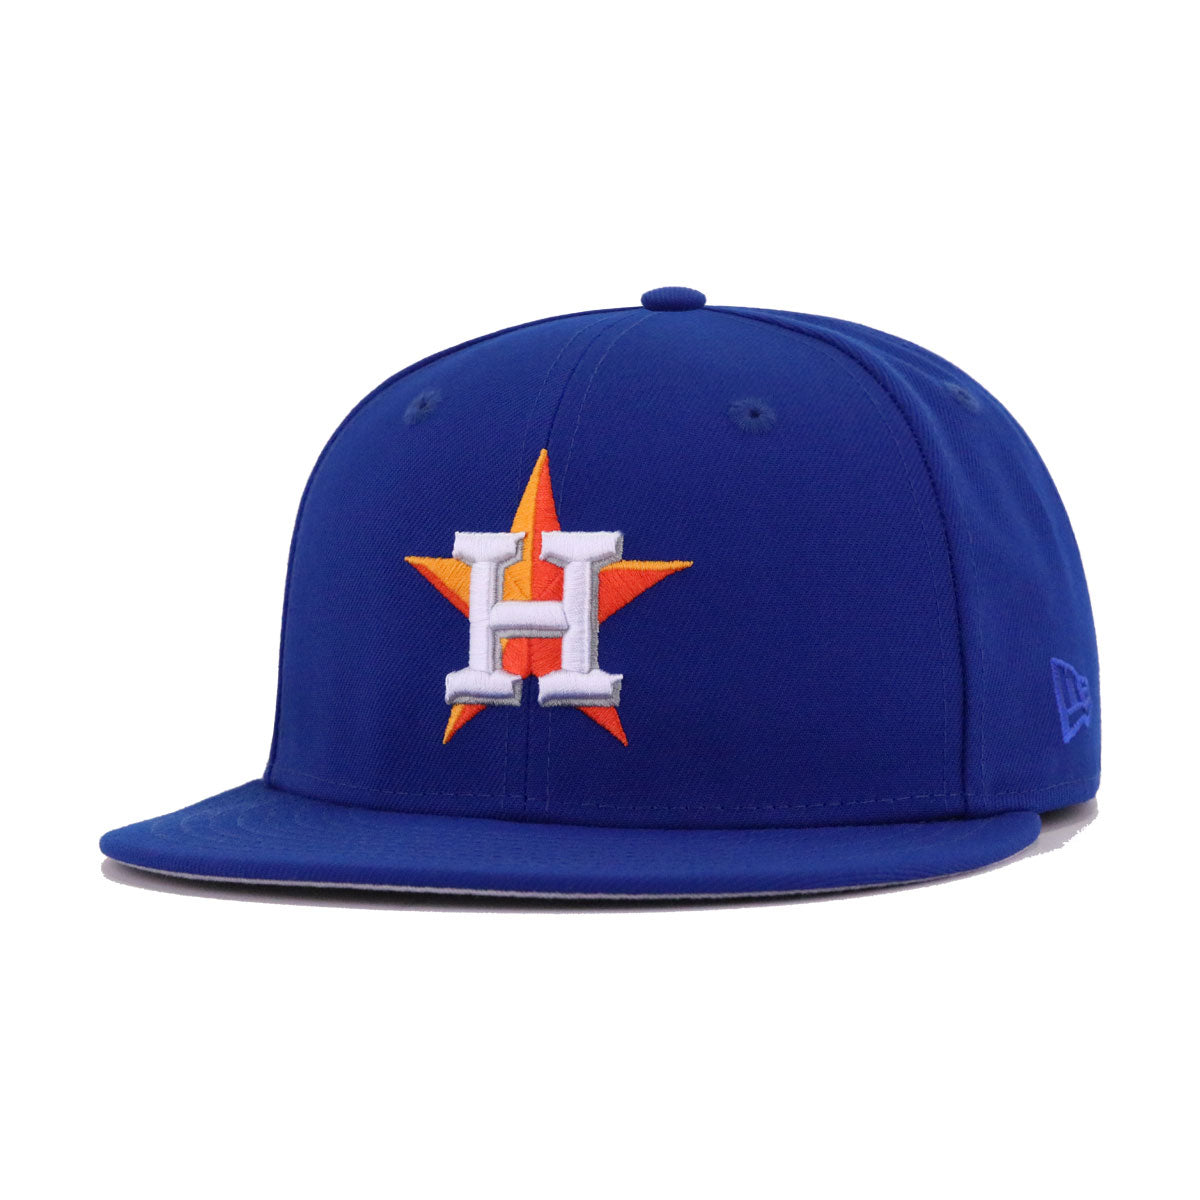 Houston Baseball Hat Light Royal Blue New Era 59FIFTY Fitted Light Royal Blue / Orangeade | Grilled Orange | White / 7 7/8